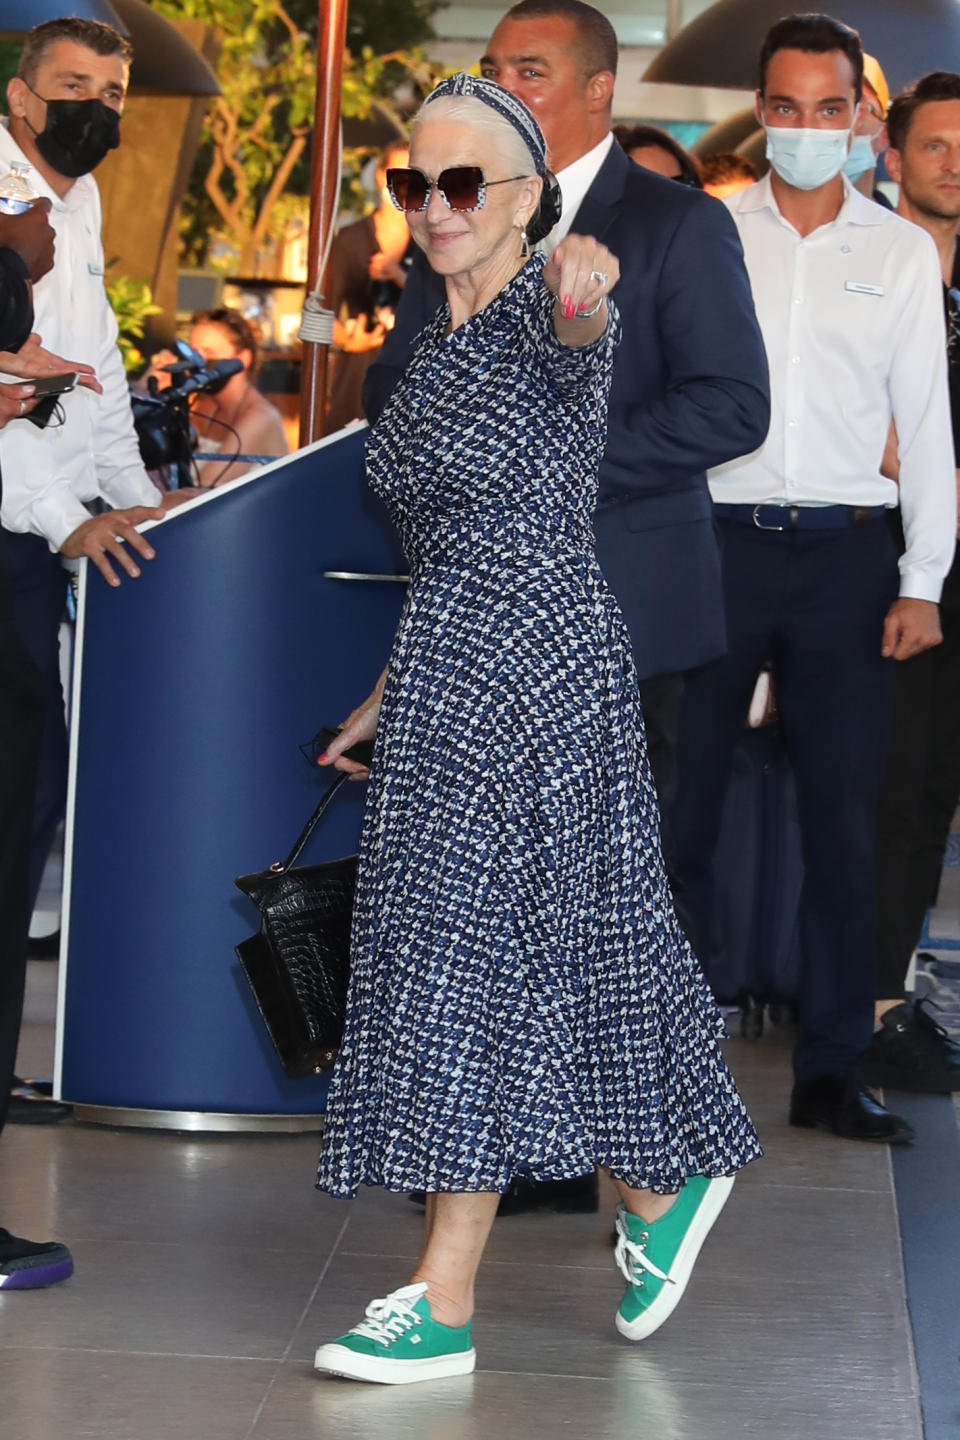 Helen Mirren arrives at the Hotel Martinez during the 2021 Cannes Film Festival. - Credit: MCvitanovic / SplashNews.com